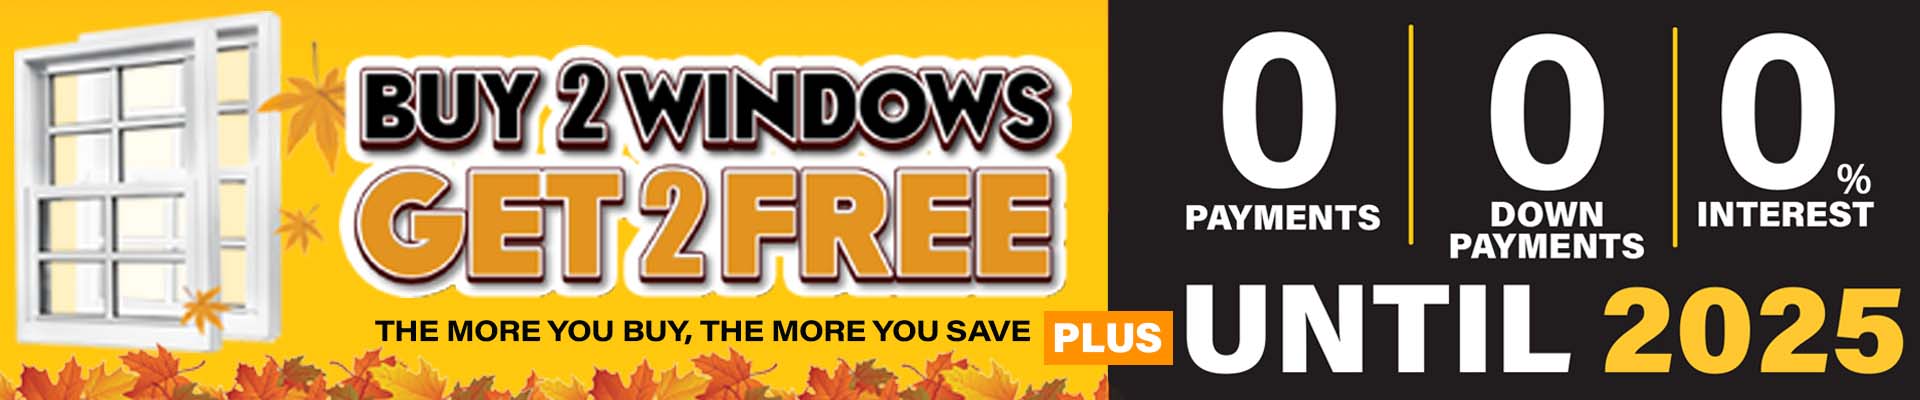 Window Nation November Offer, B2G2 Free Fall into Savings - 1920x400